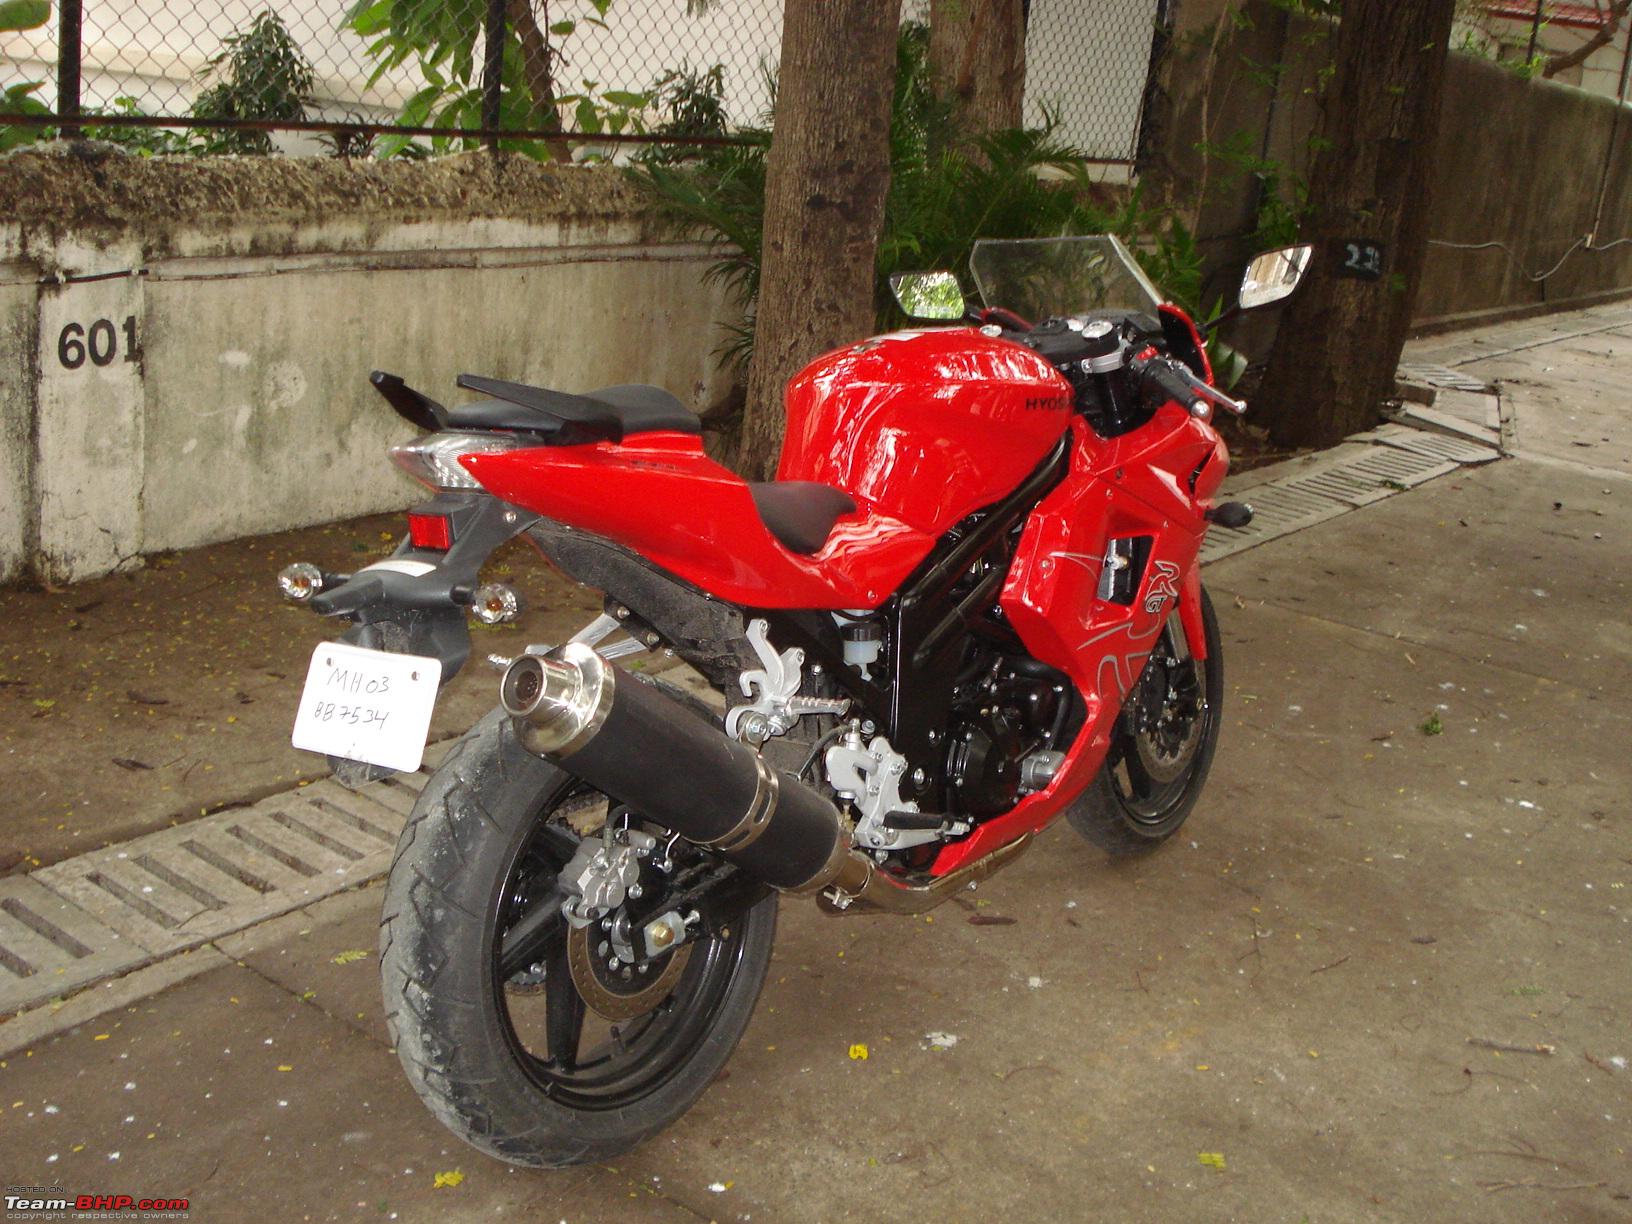 Used 2014 model Hyosung GT650R for sale in New Delhi ID 235505  Bikes4Sale